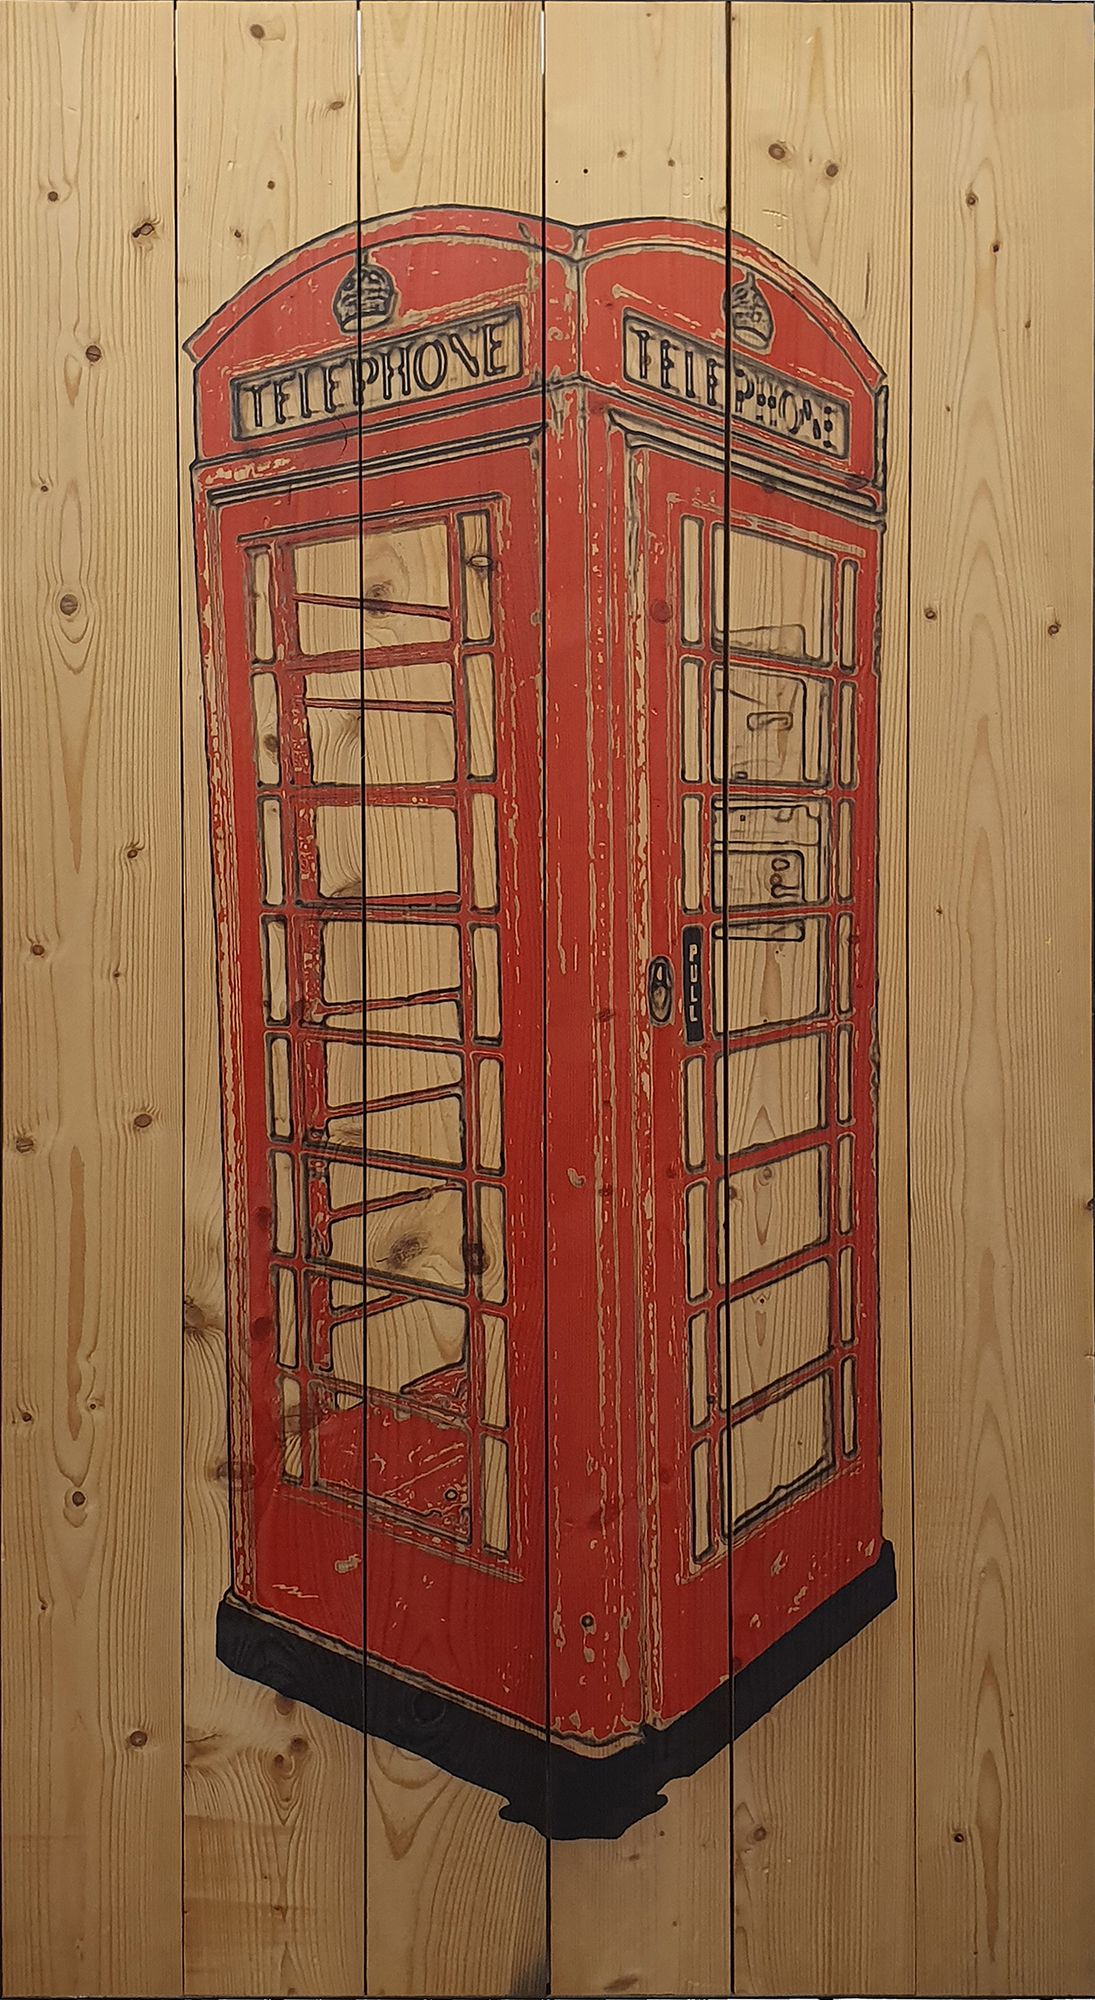 London Phone Box by Michael Wallner